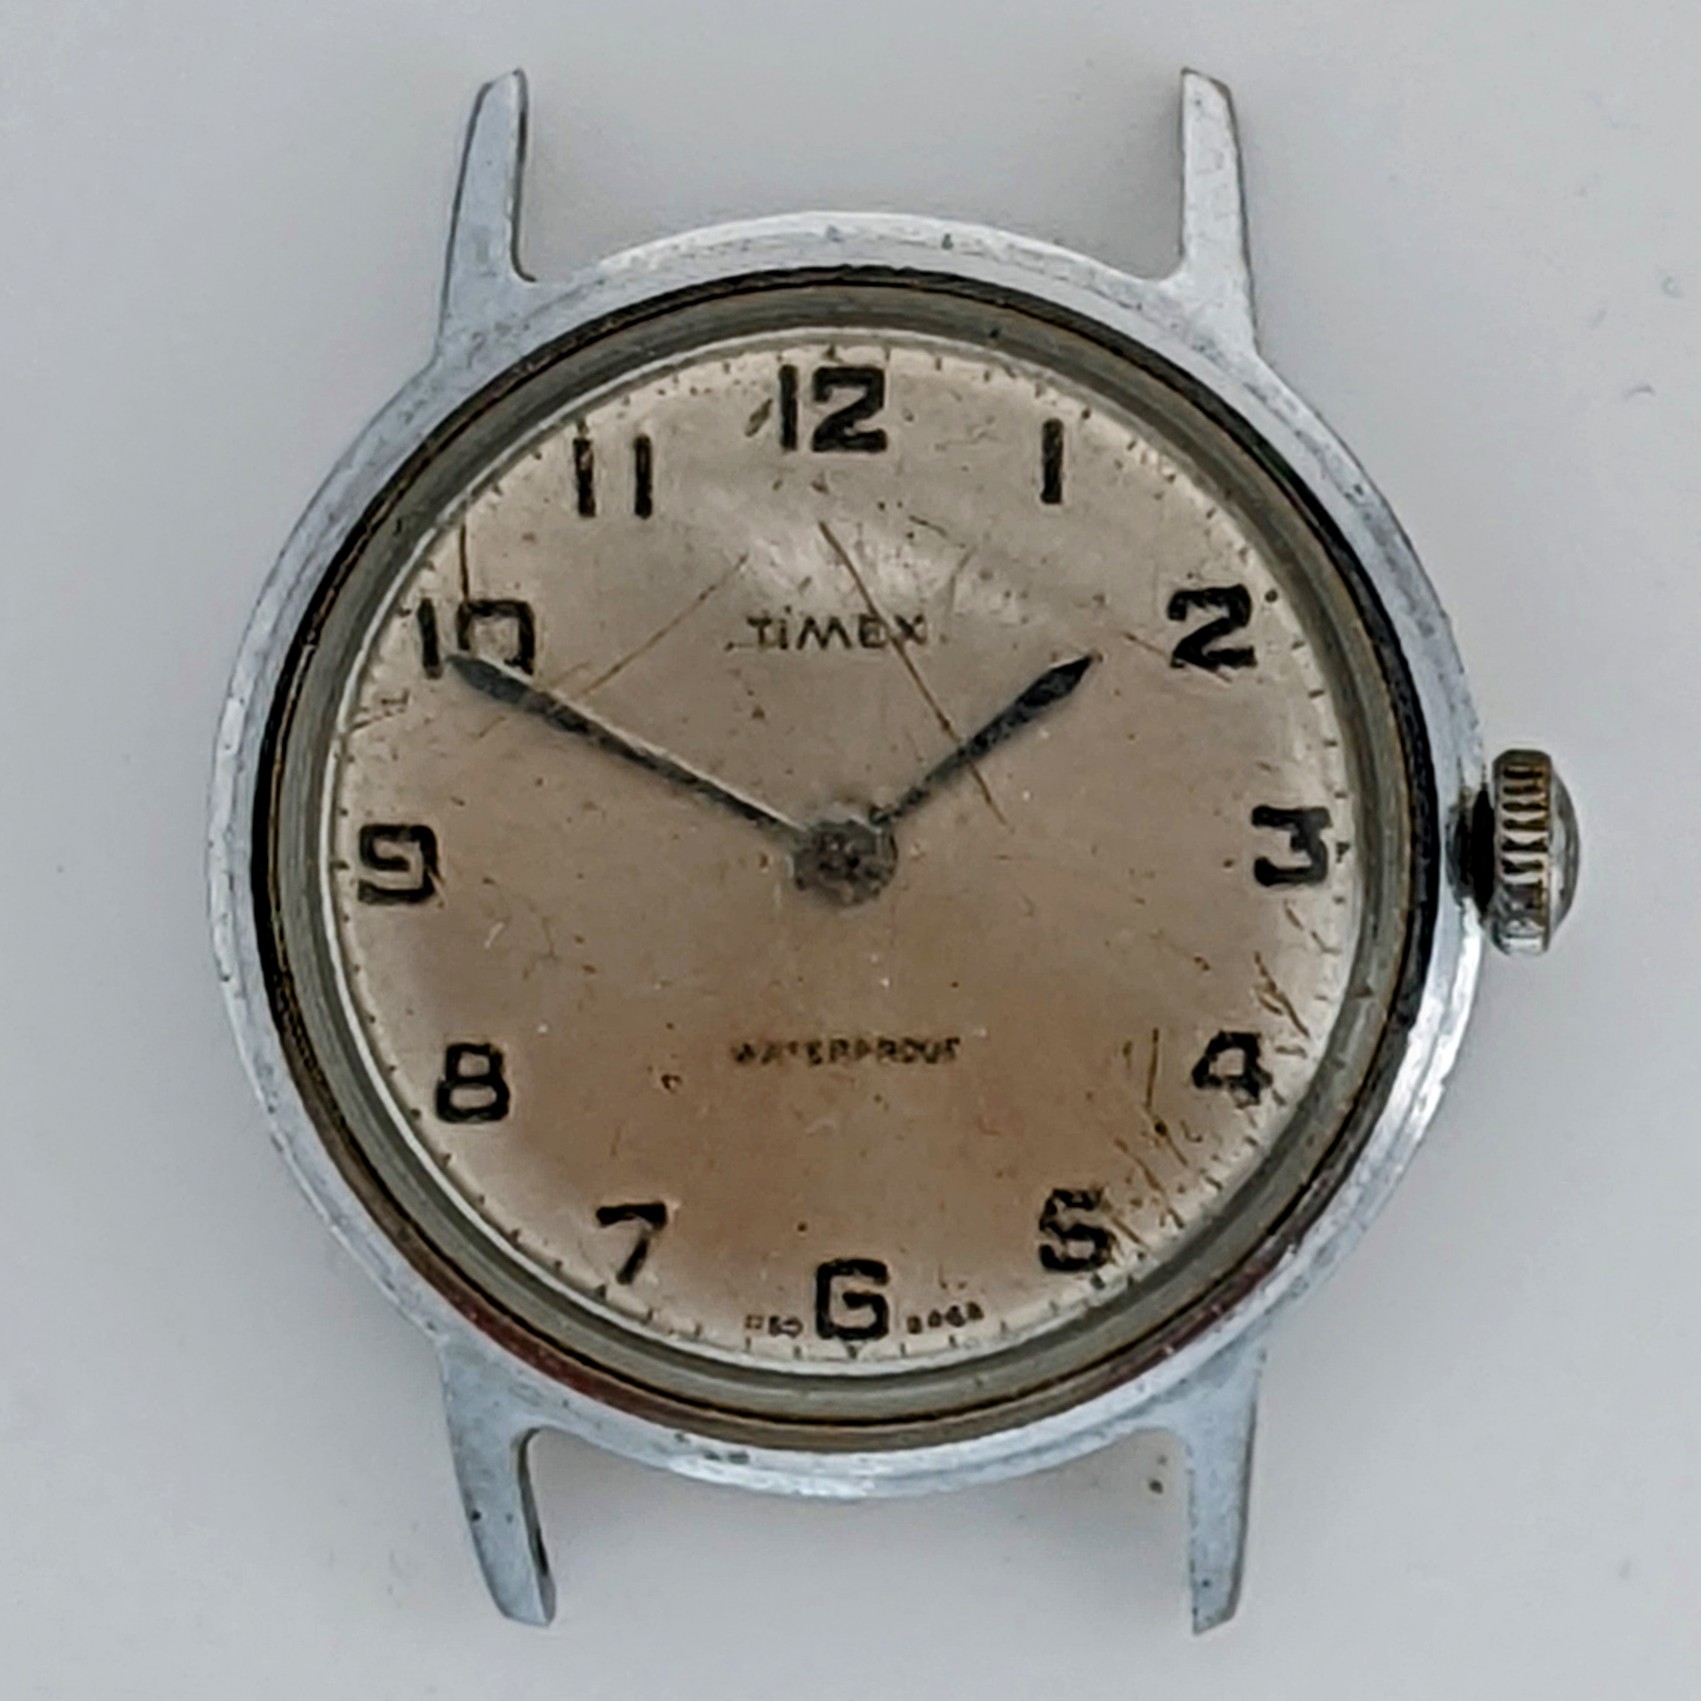 Timex Sprite 1150 2468 [1968]